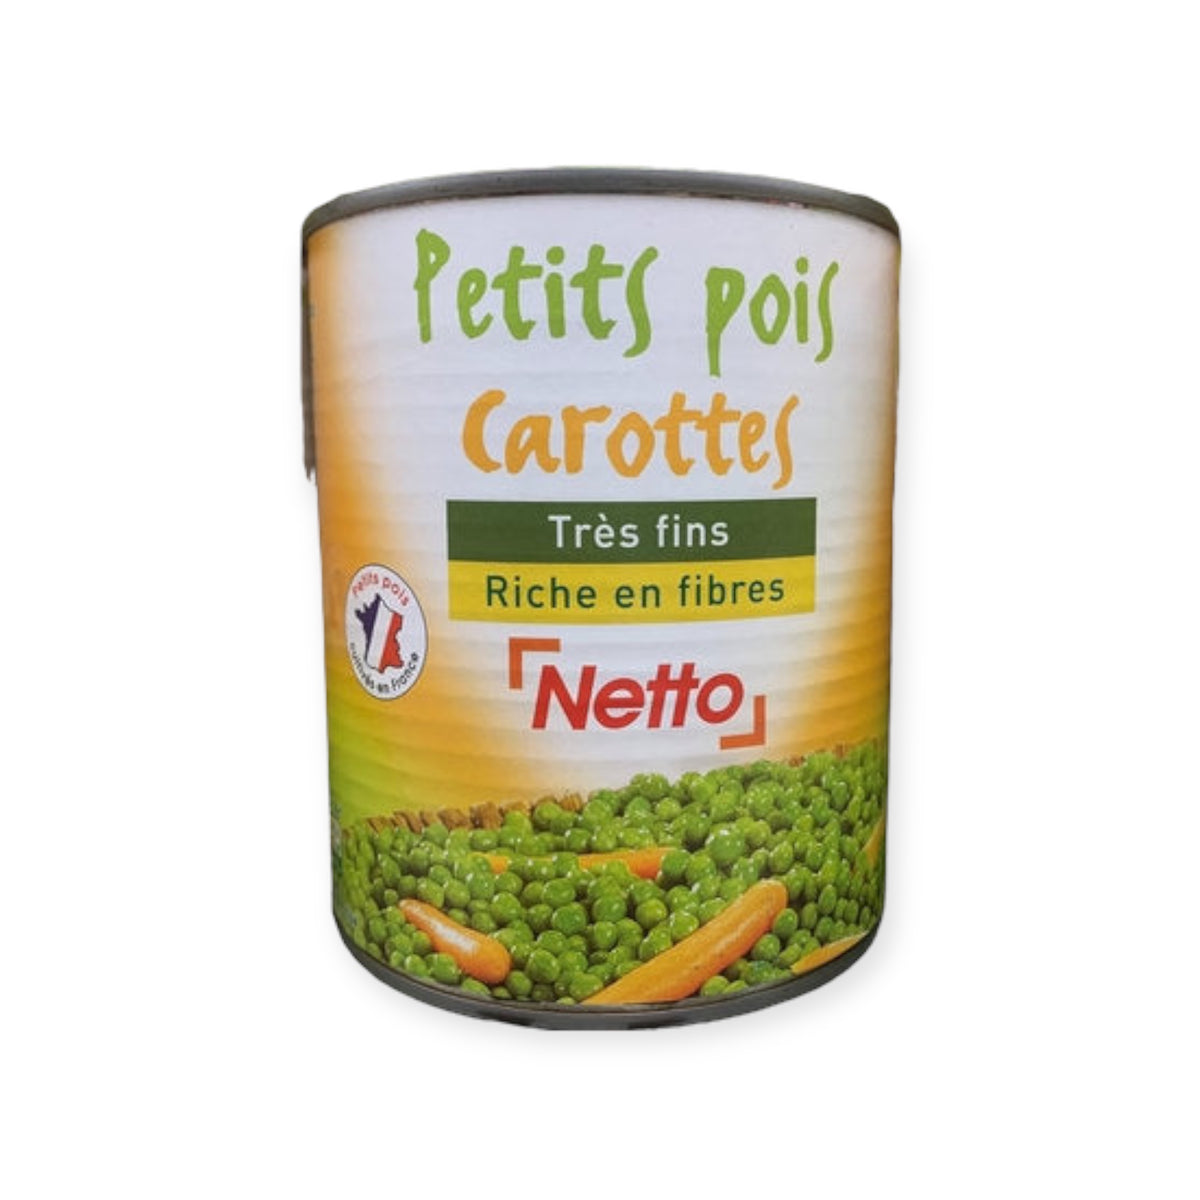 Netto peas and carrots rich in very fine fiber